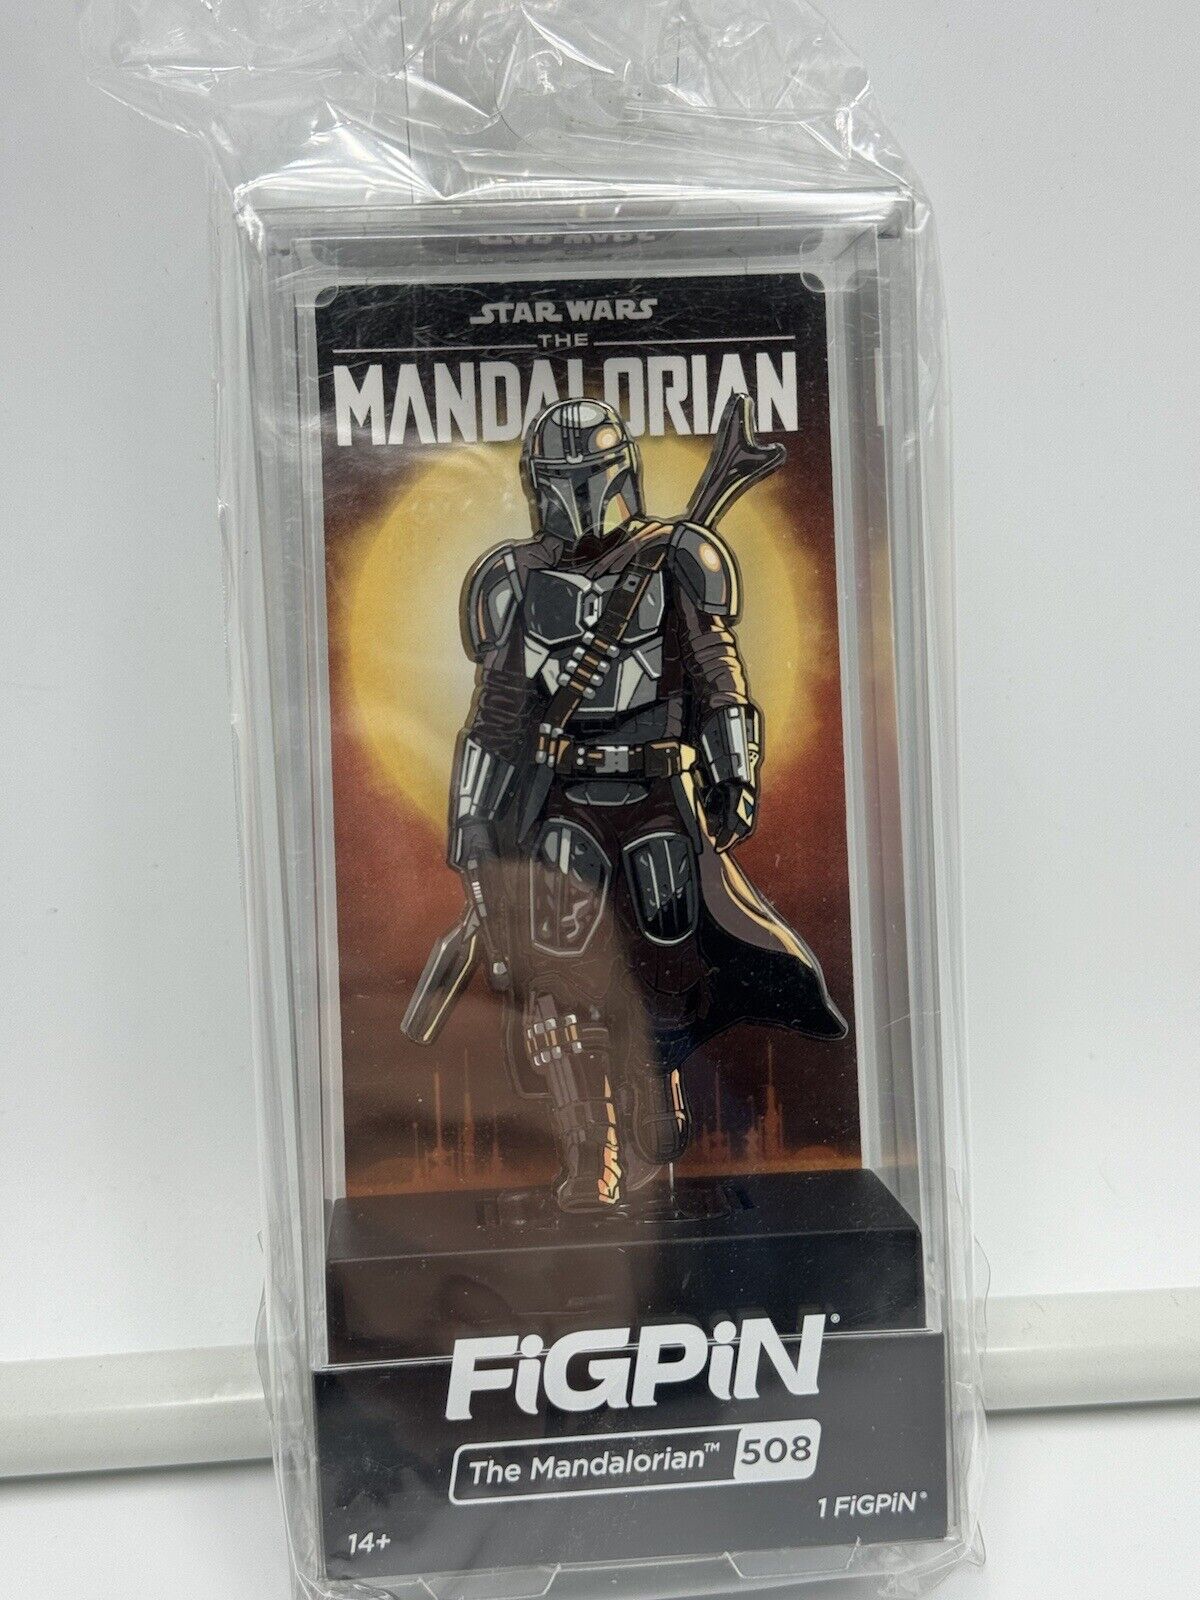 NEW WITH TAG Figpin Disney Star Wars Mandalorian Pin #508